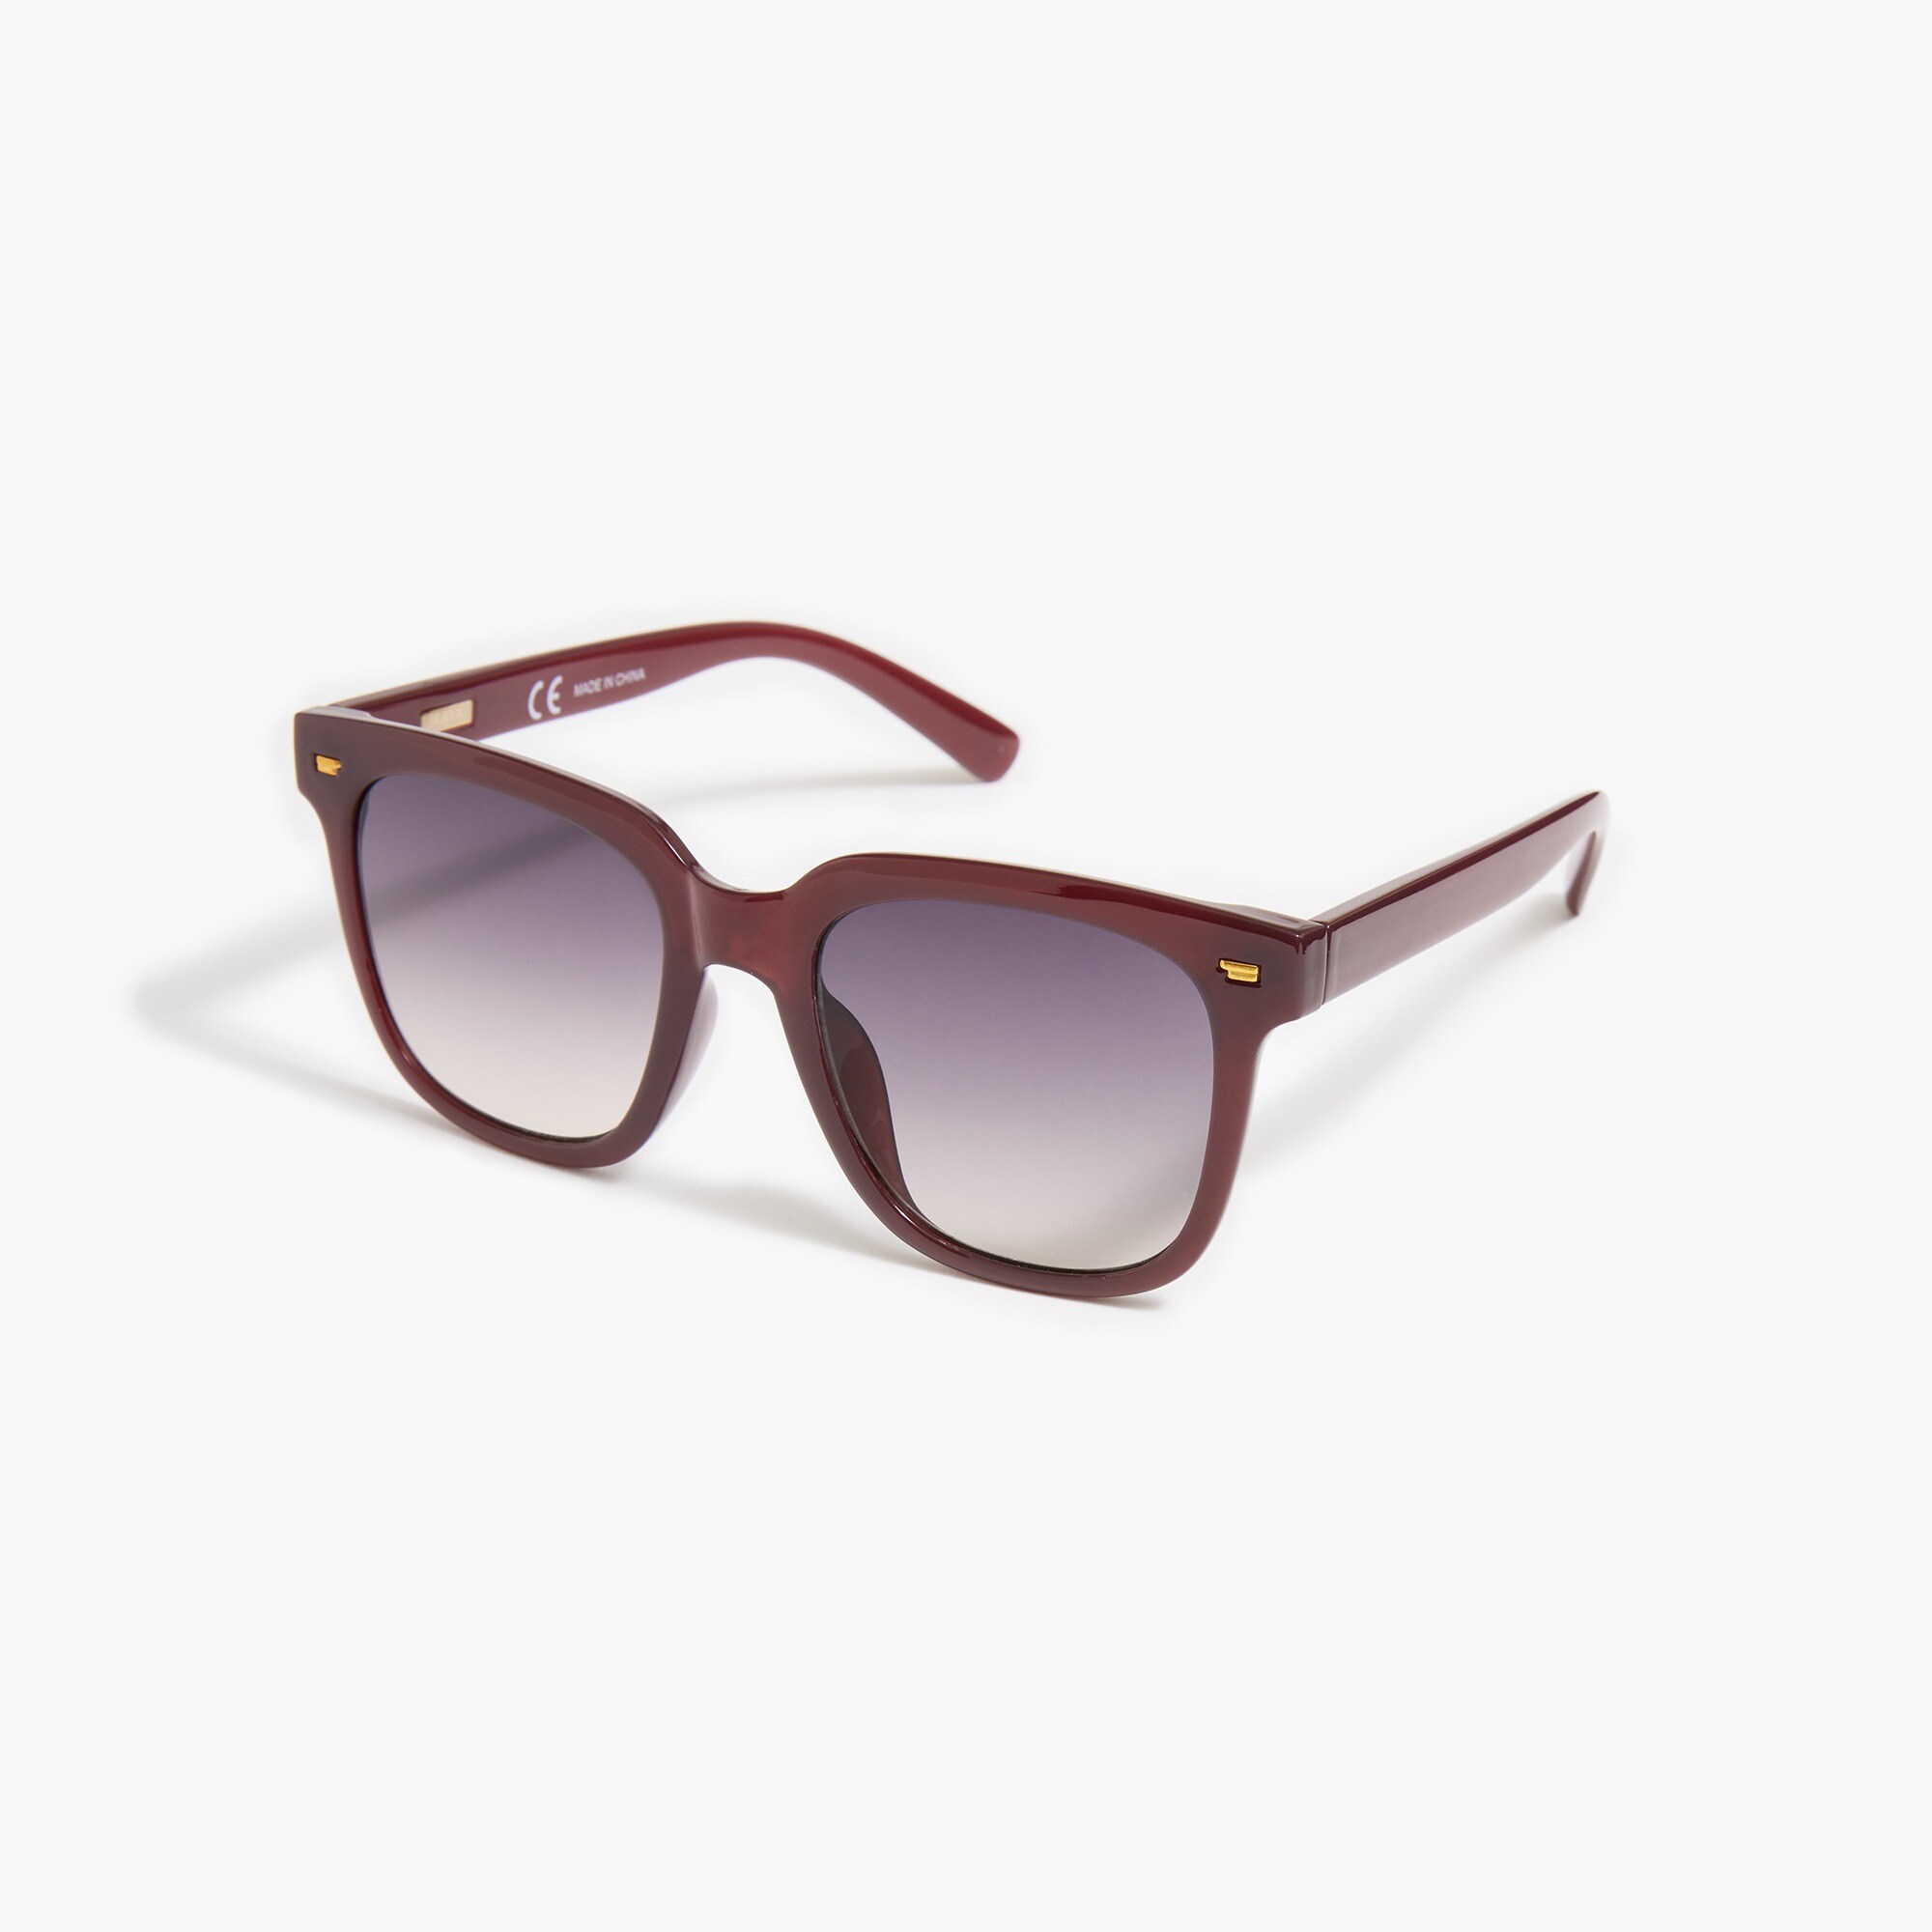  Slim D-frame sunglasses